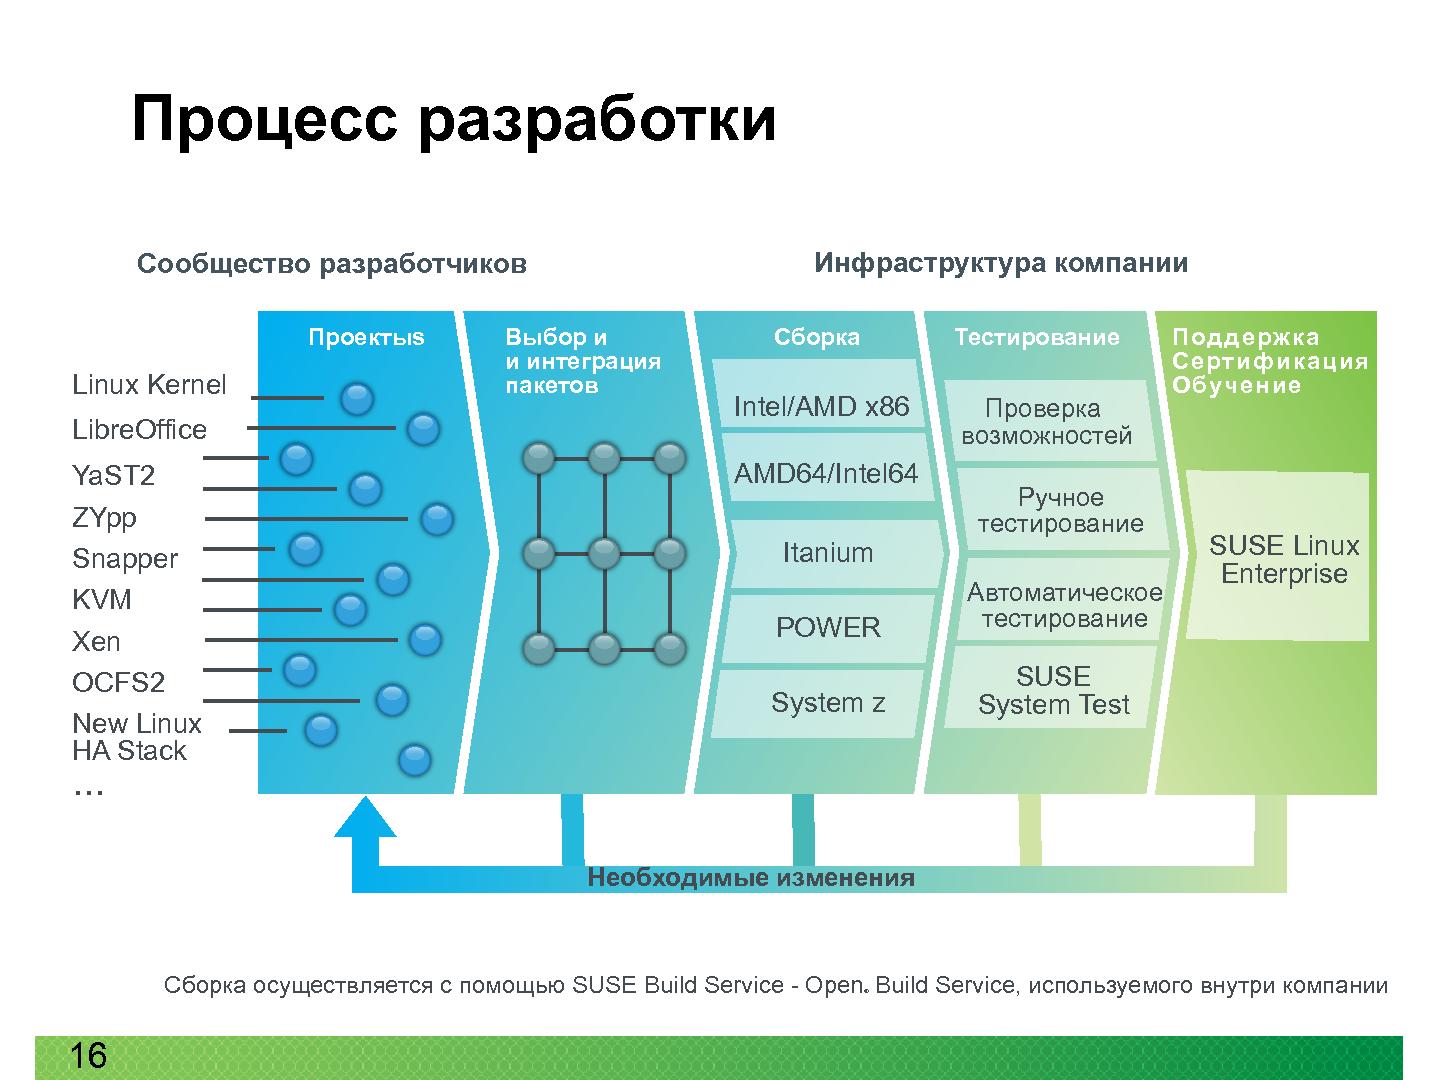 Файл:Экосистема SUSE (Кирилл Степанов, ROSS-2013).pdf